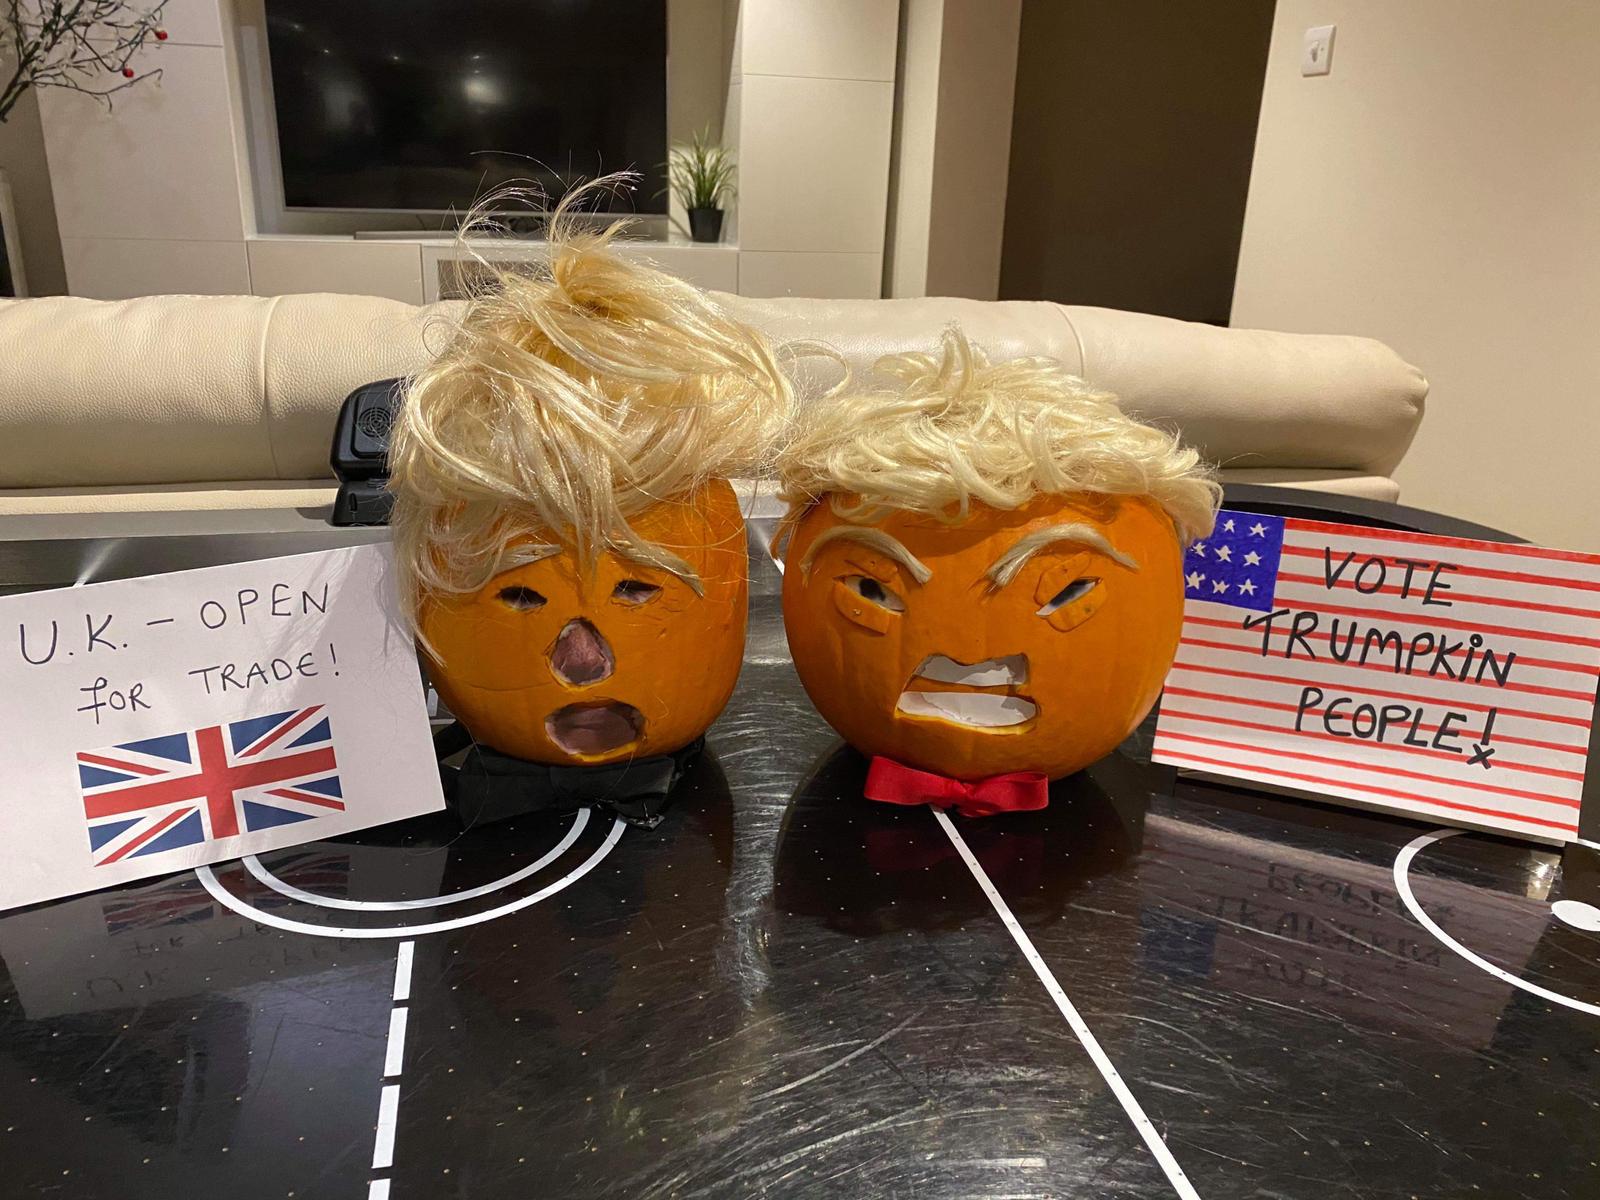 Boris Johnson and Donald Trump represented as pumpkins